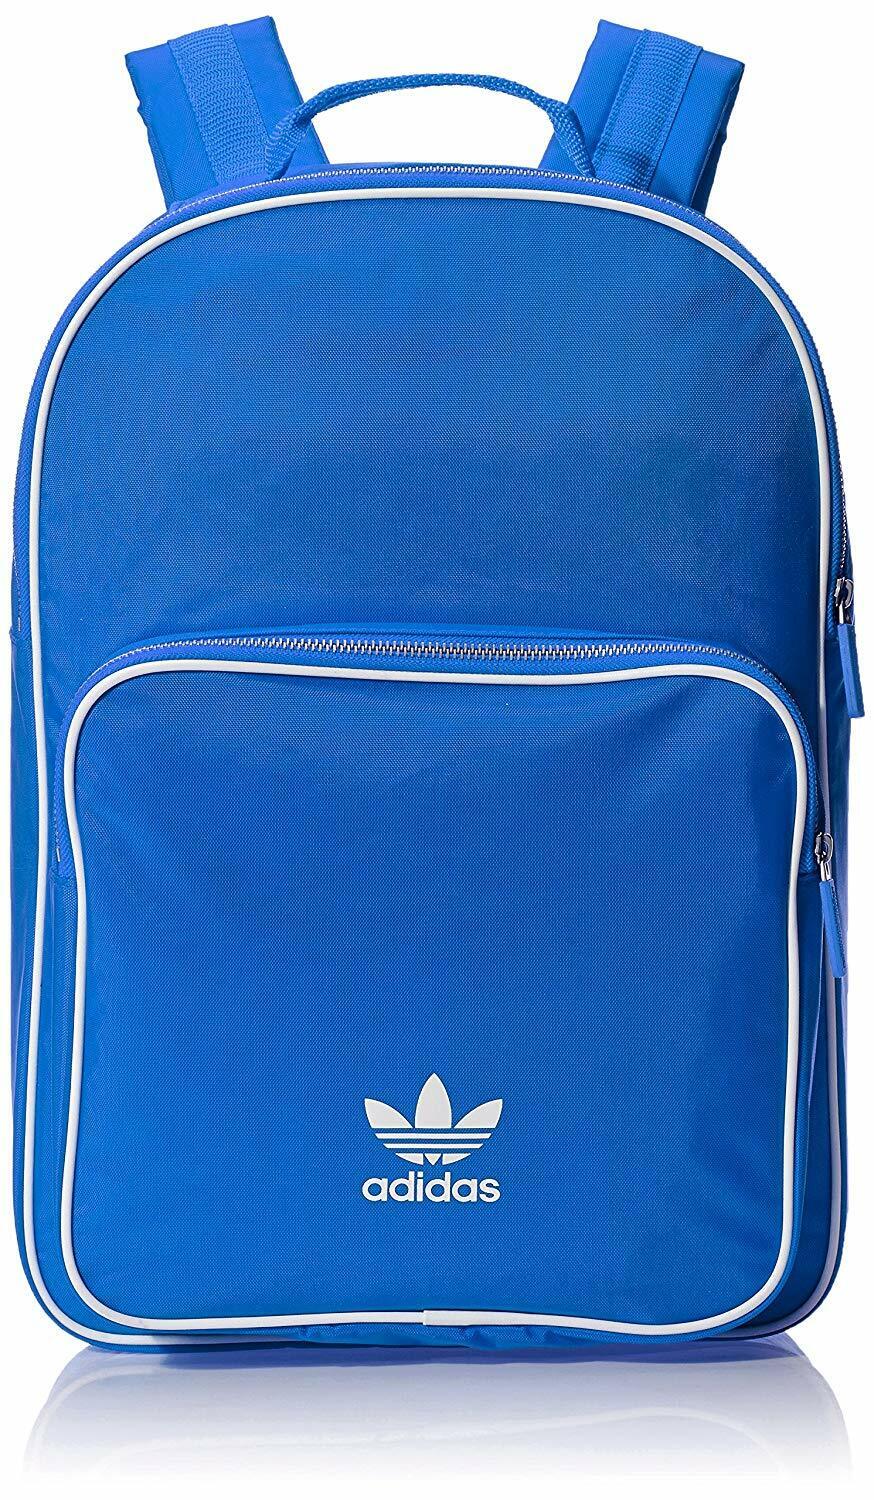 New adidas Originals Classic Trefoil Blue Backpack gym school rucksack  CW0628